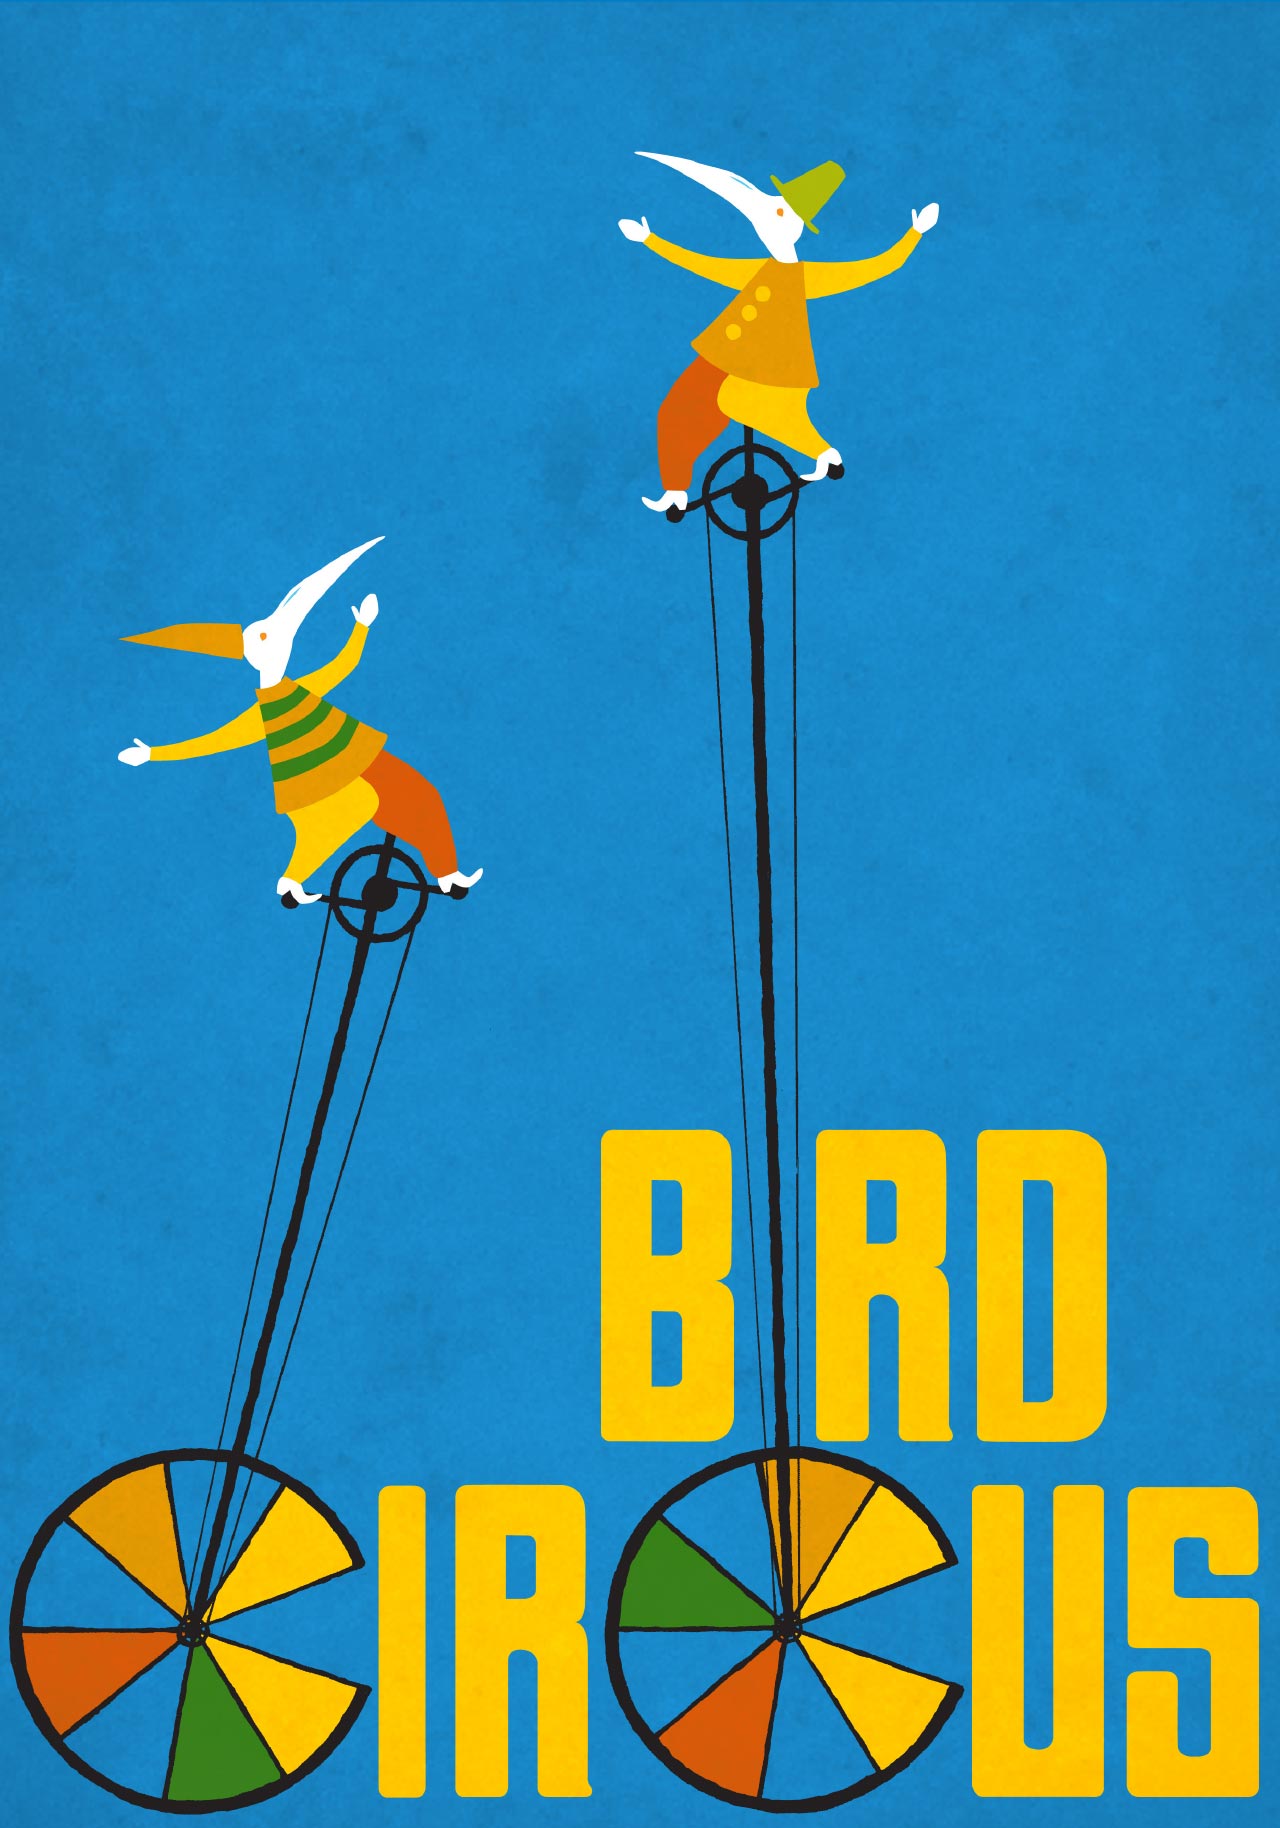 Bird Circus Unicyclists